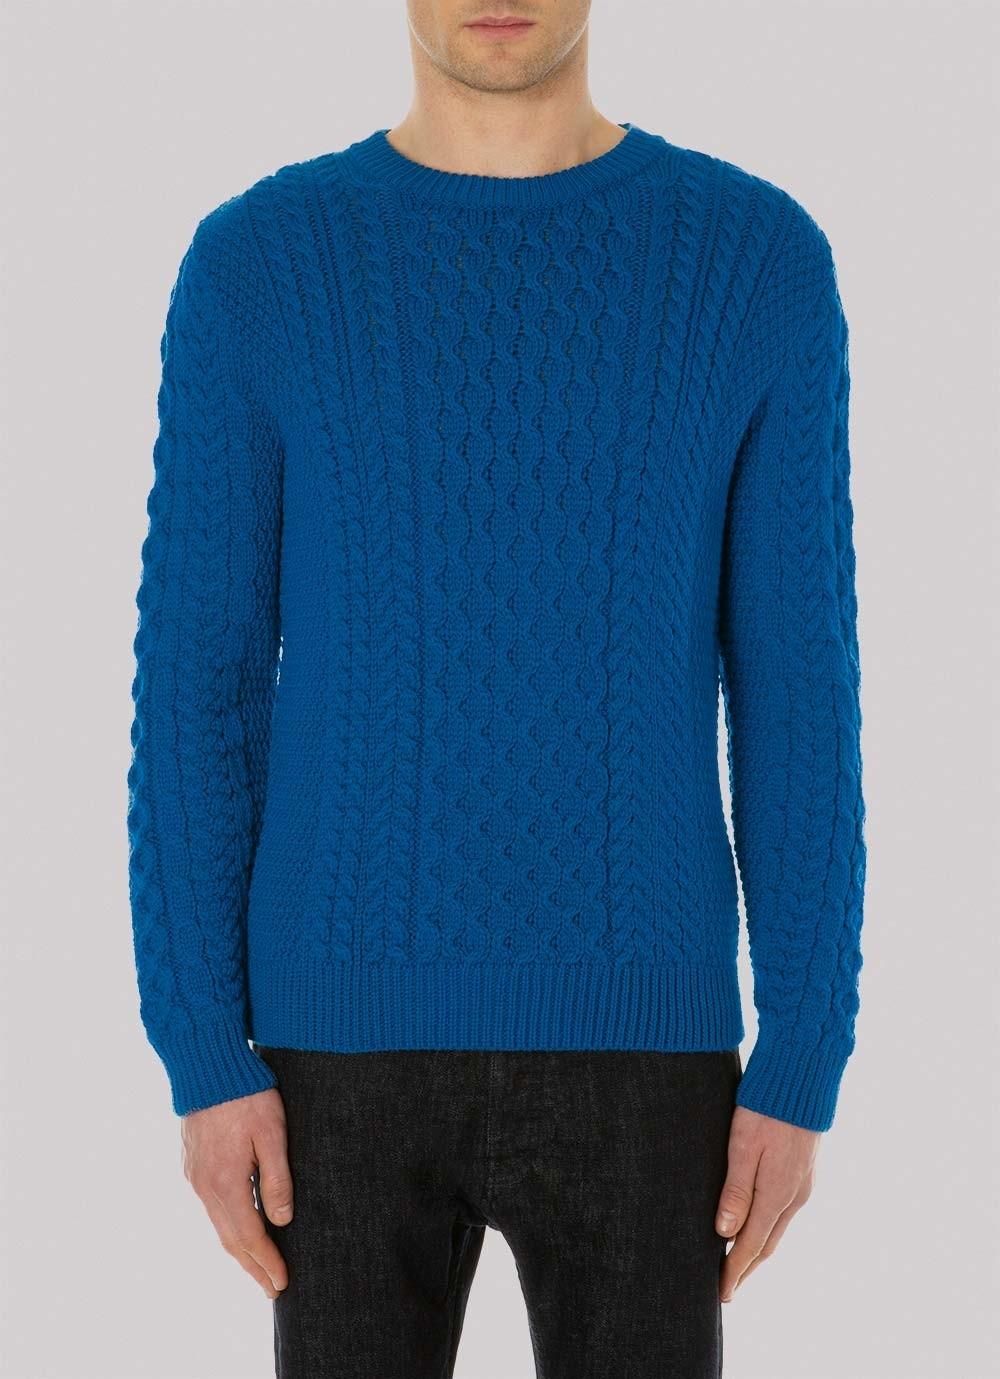 Sunspel Men's Merino Wool Cable Knit Jumper In Cobalt Blue for Men - Lyst